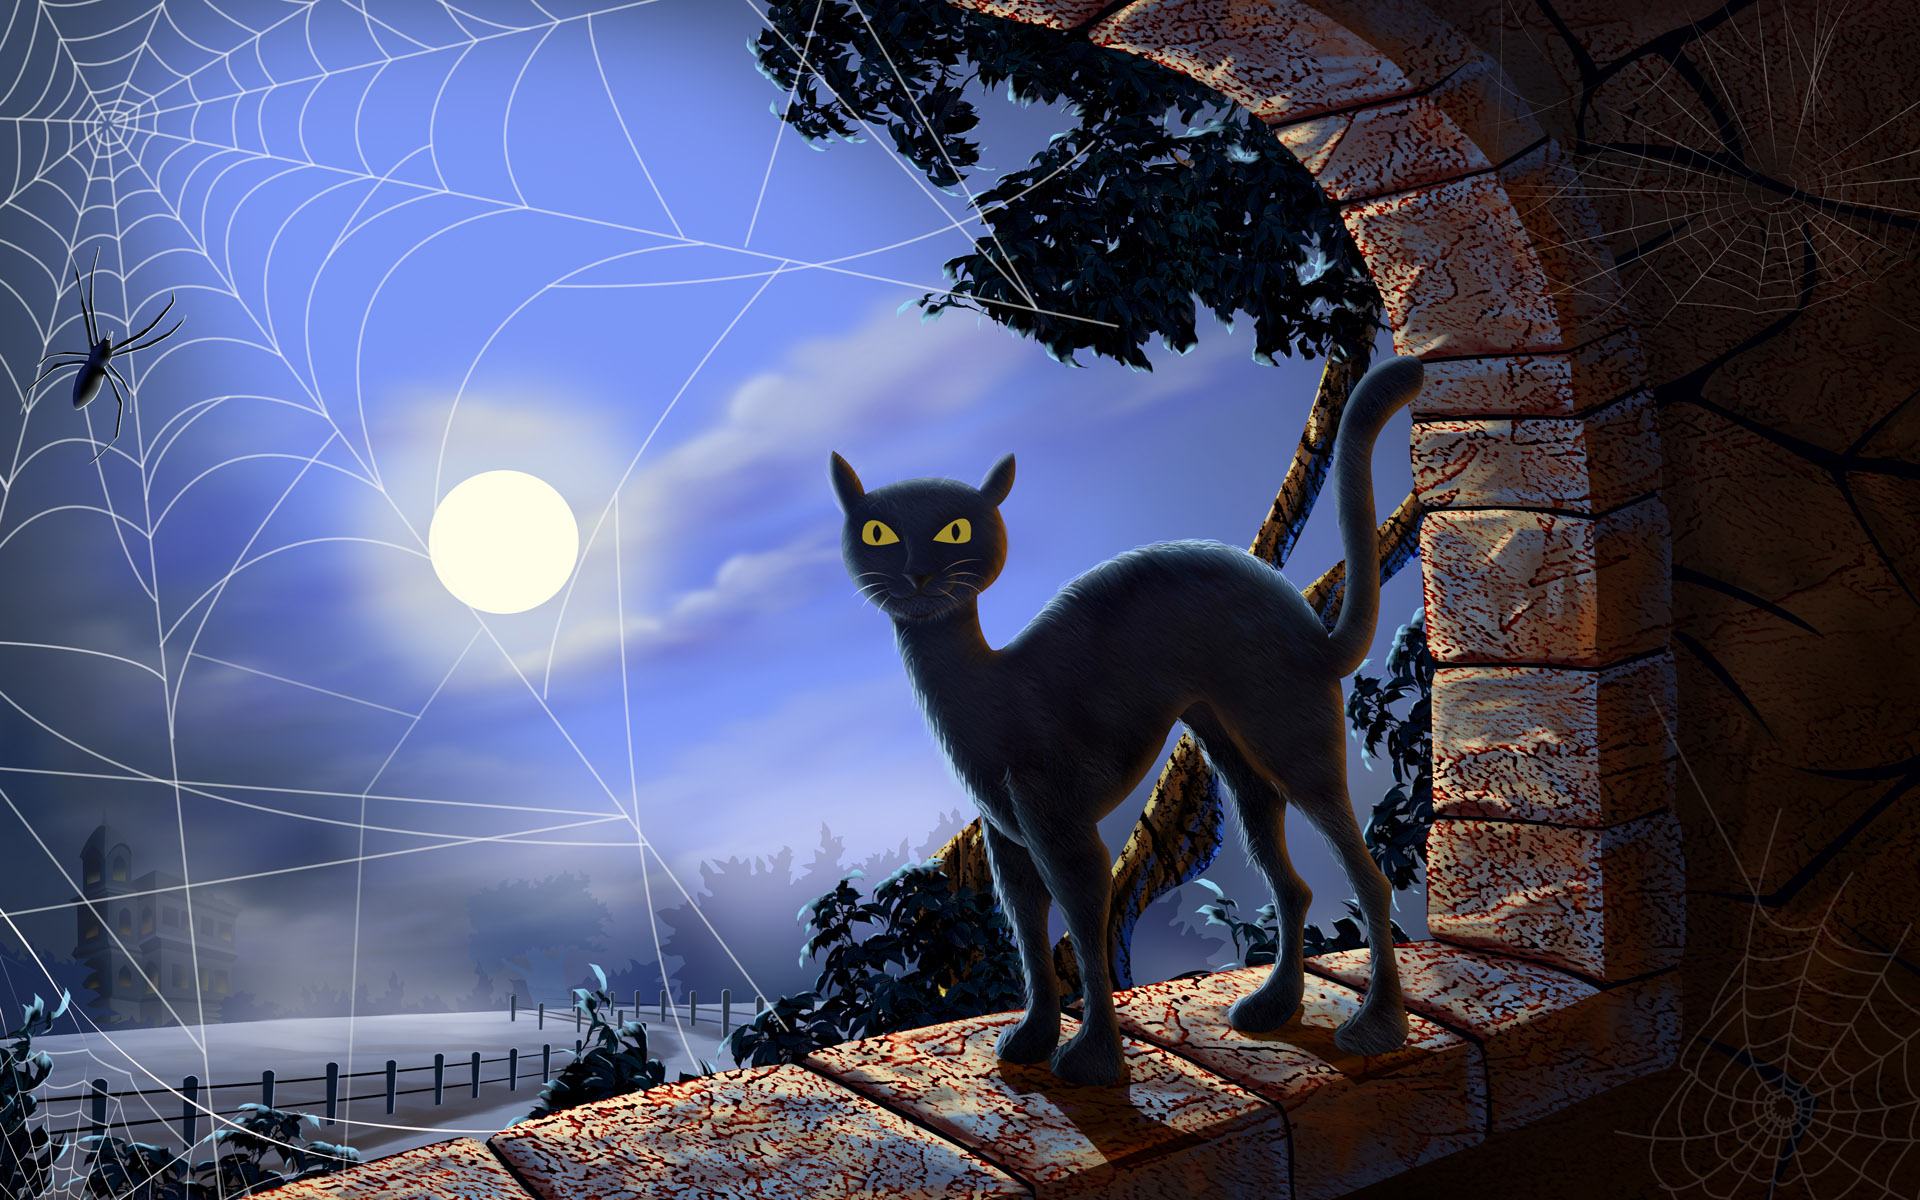 Top Art Desktop Backgrounds: Spooky HD Backgrounds #893023 |.Ssoflx